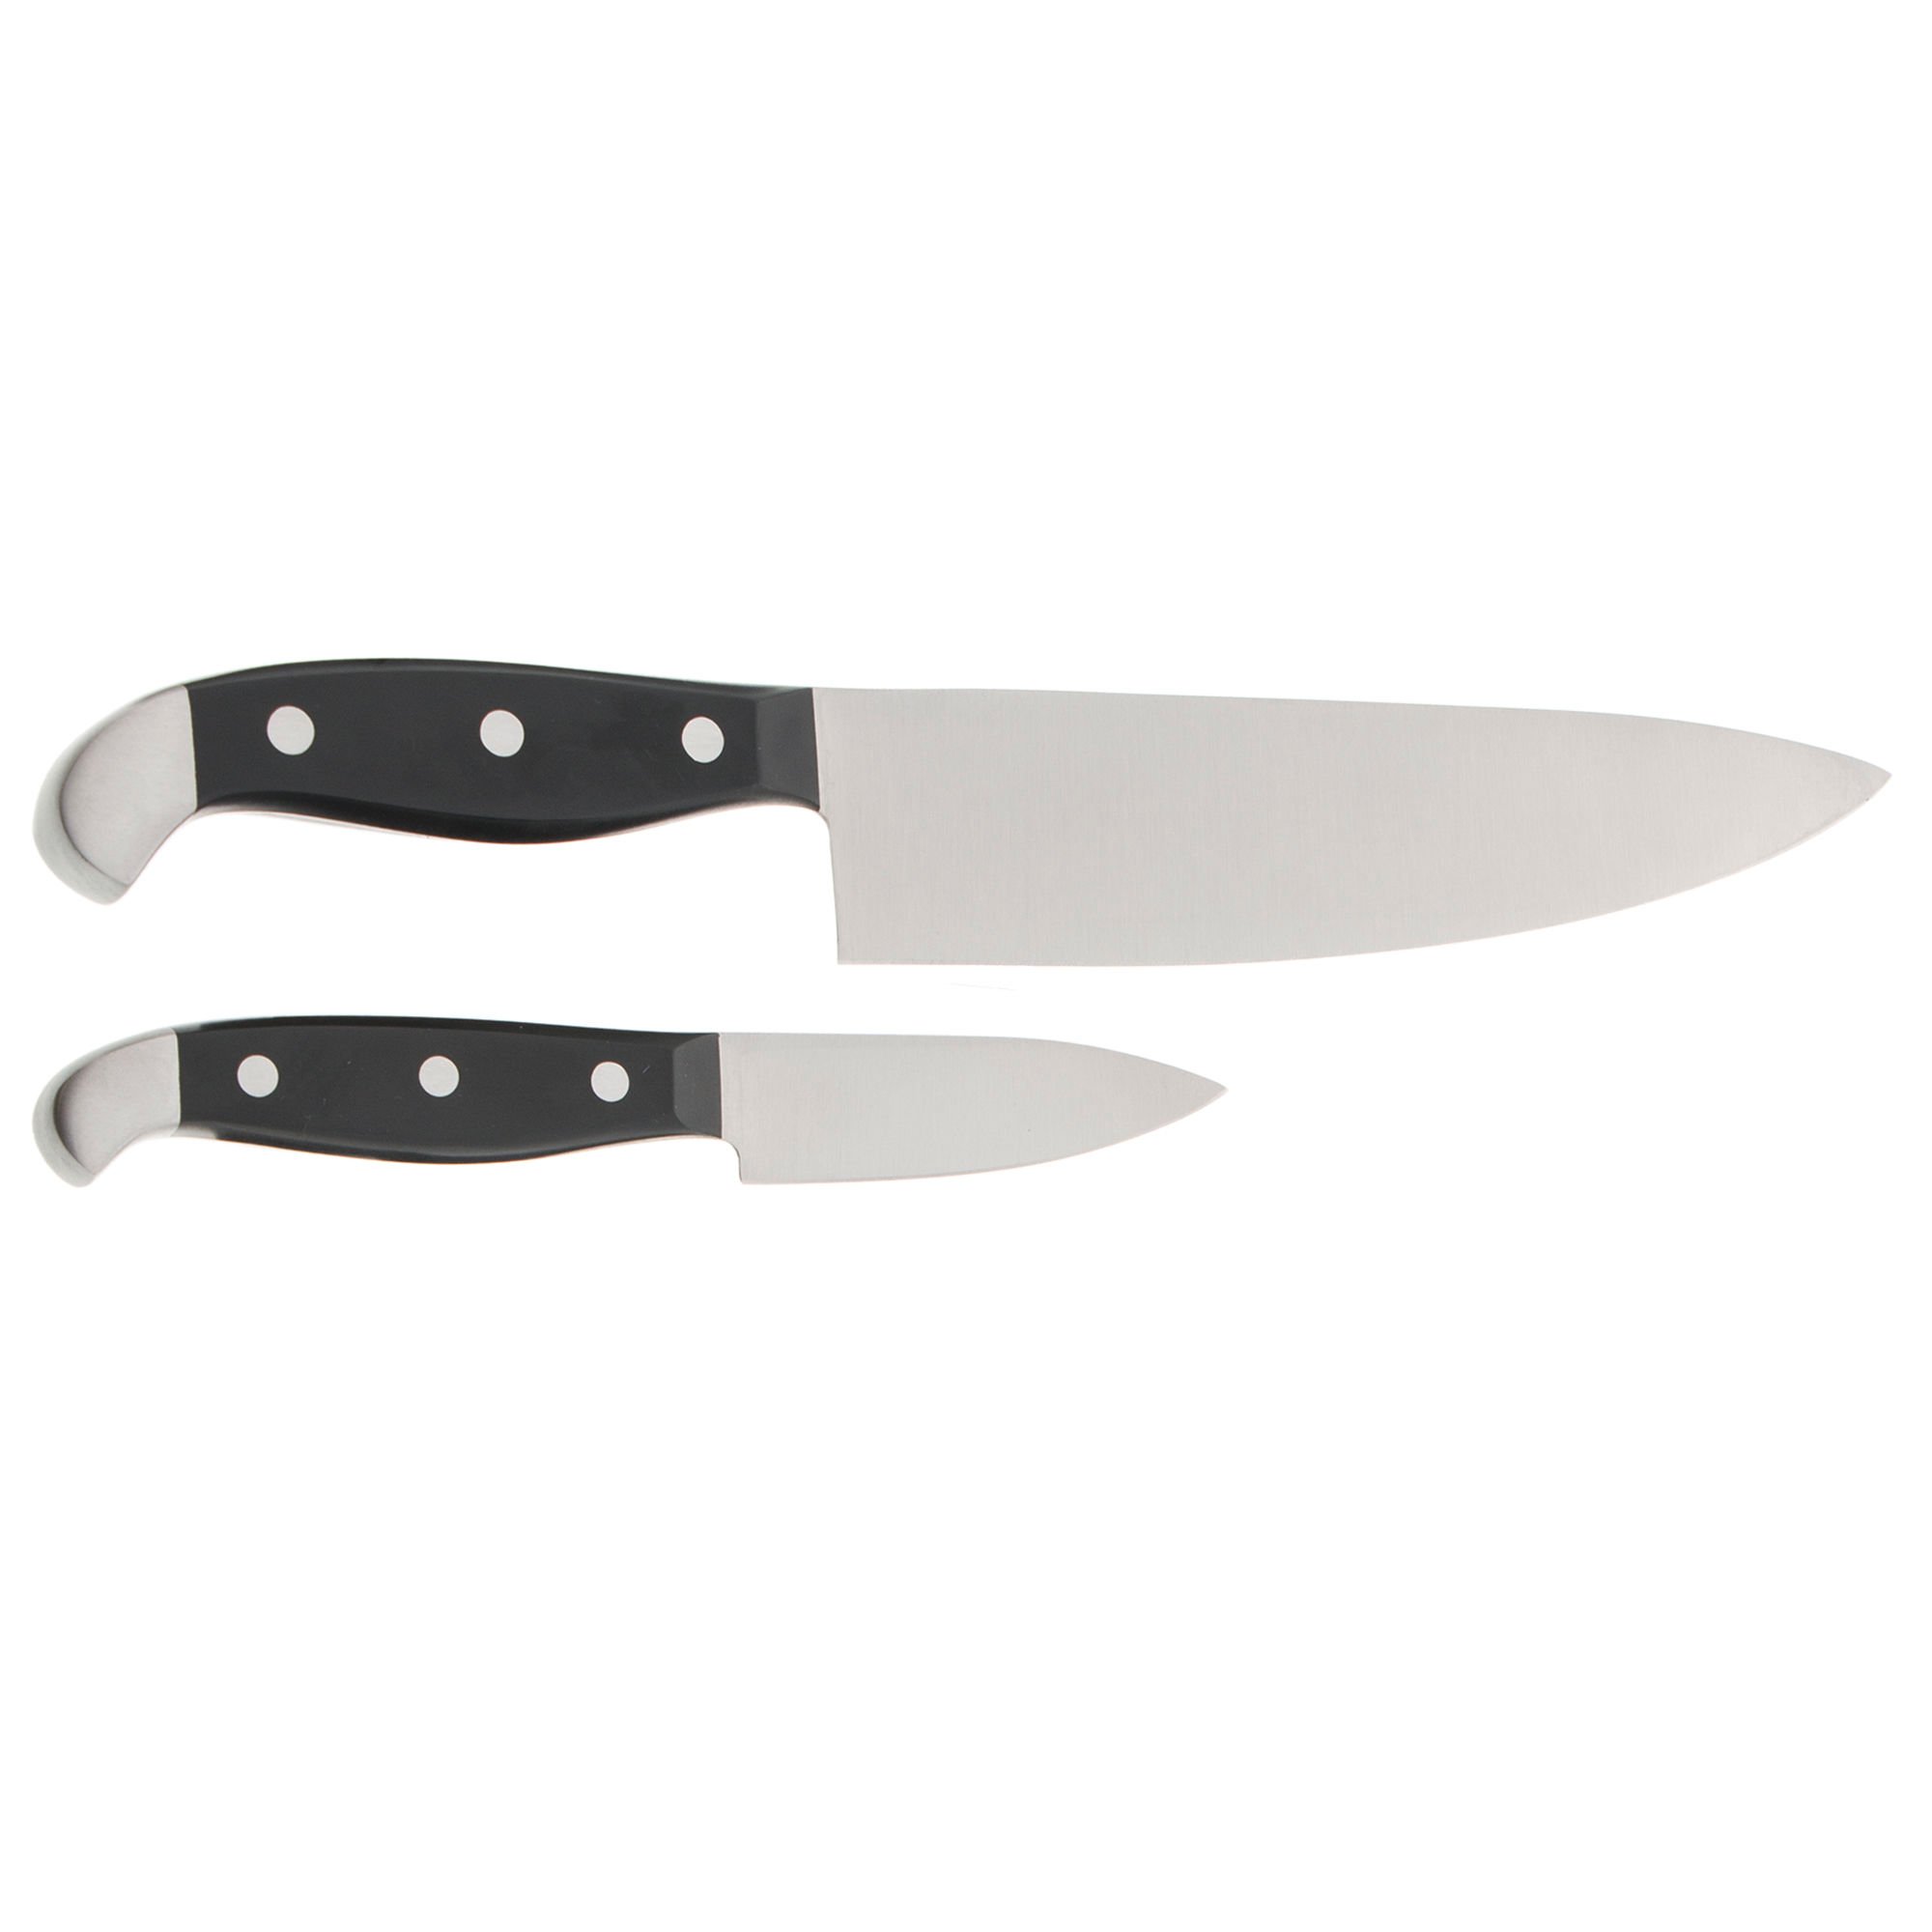 Henckels Definition Chefs Knife - Silver/Black, 8-inch - Kroger